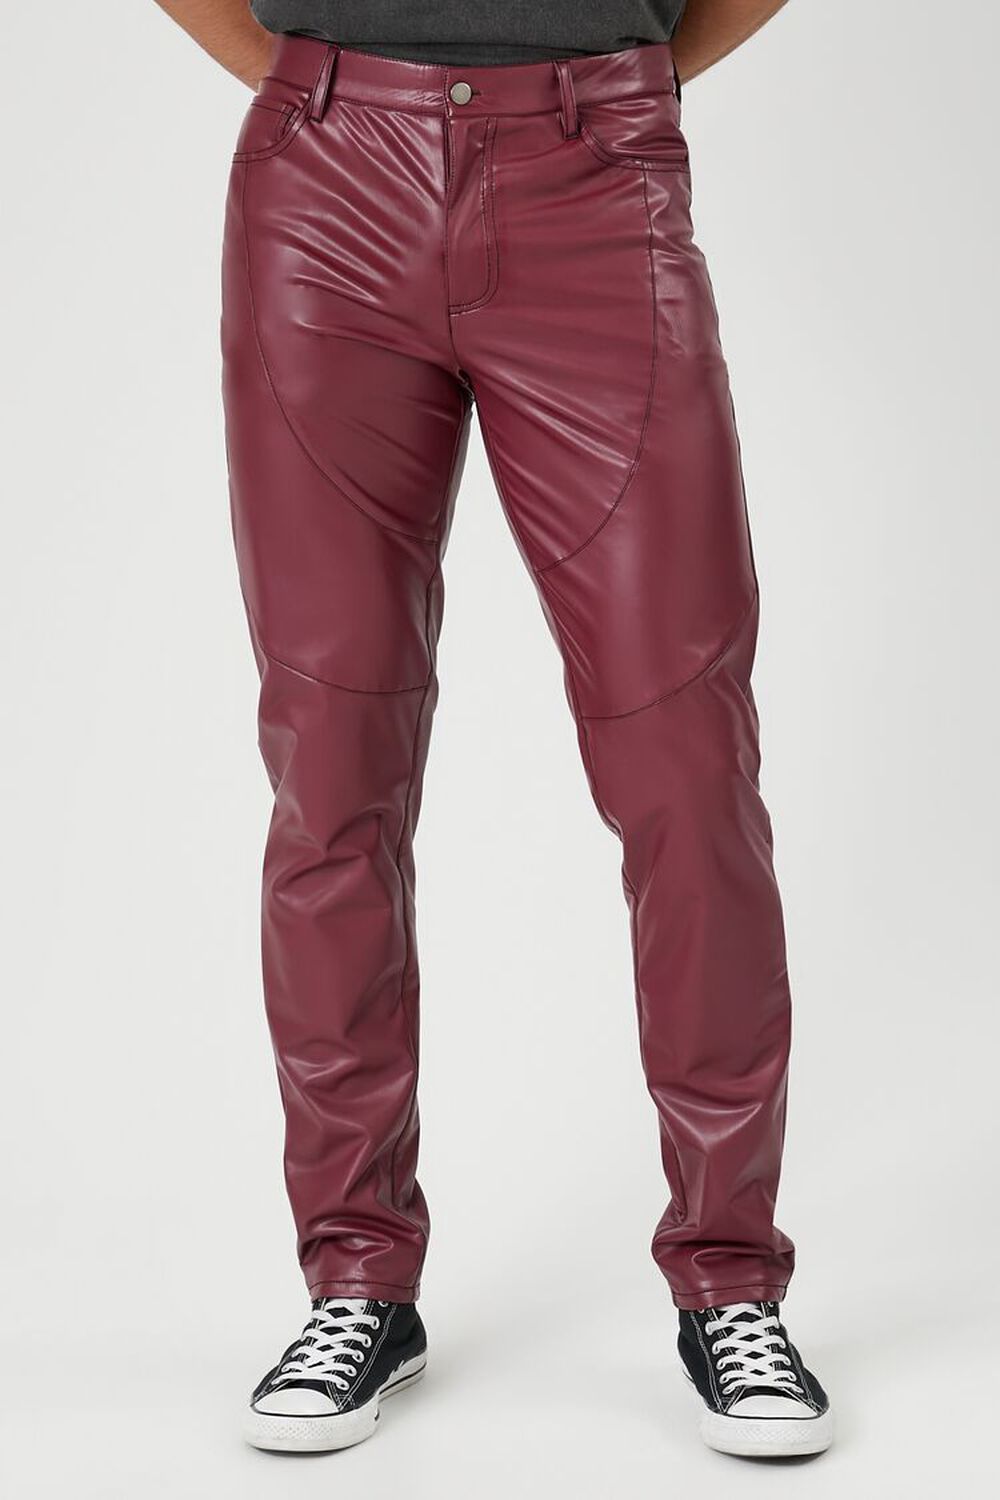 BURGUNDY/BLACK Faux Leather Skinny Pants, image 2